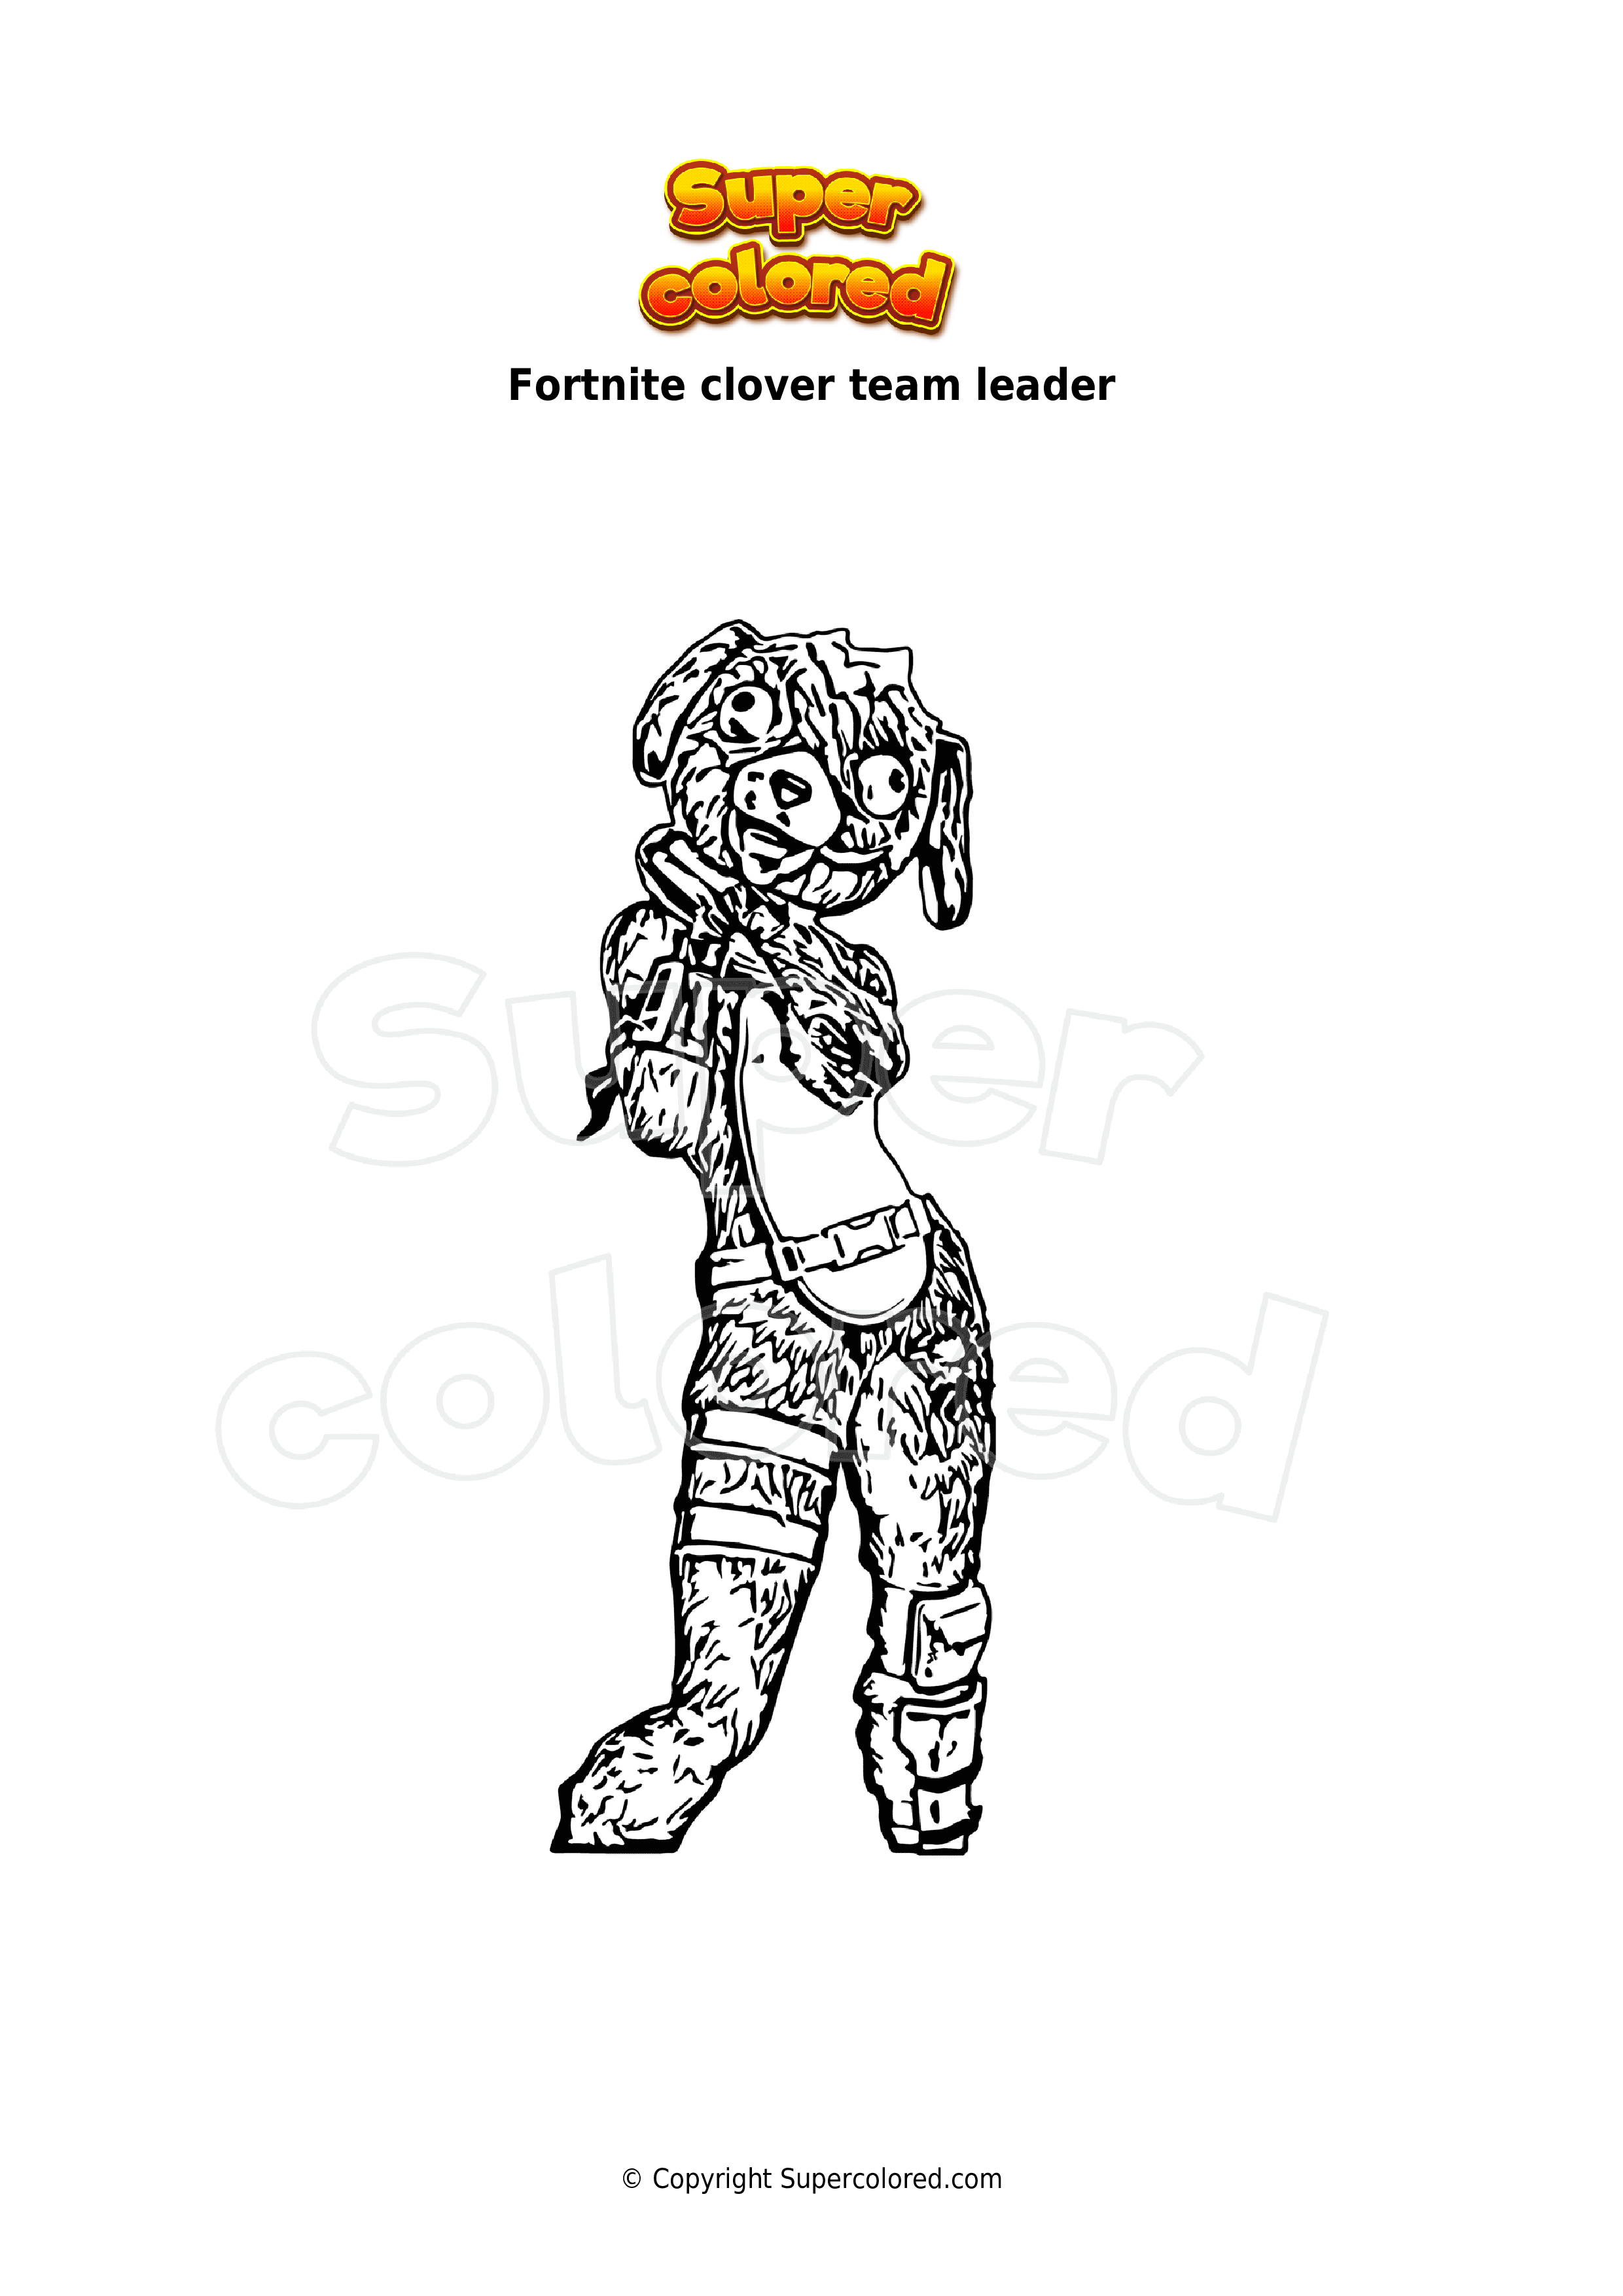 Clover Team Leader Fortnite Wallpapers